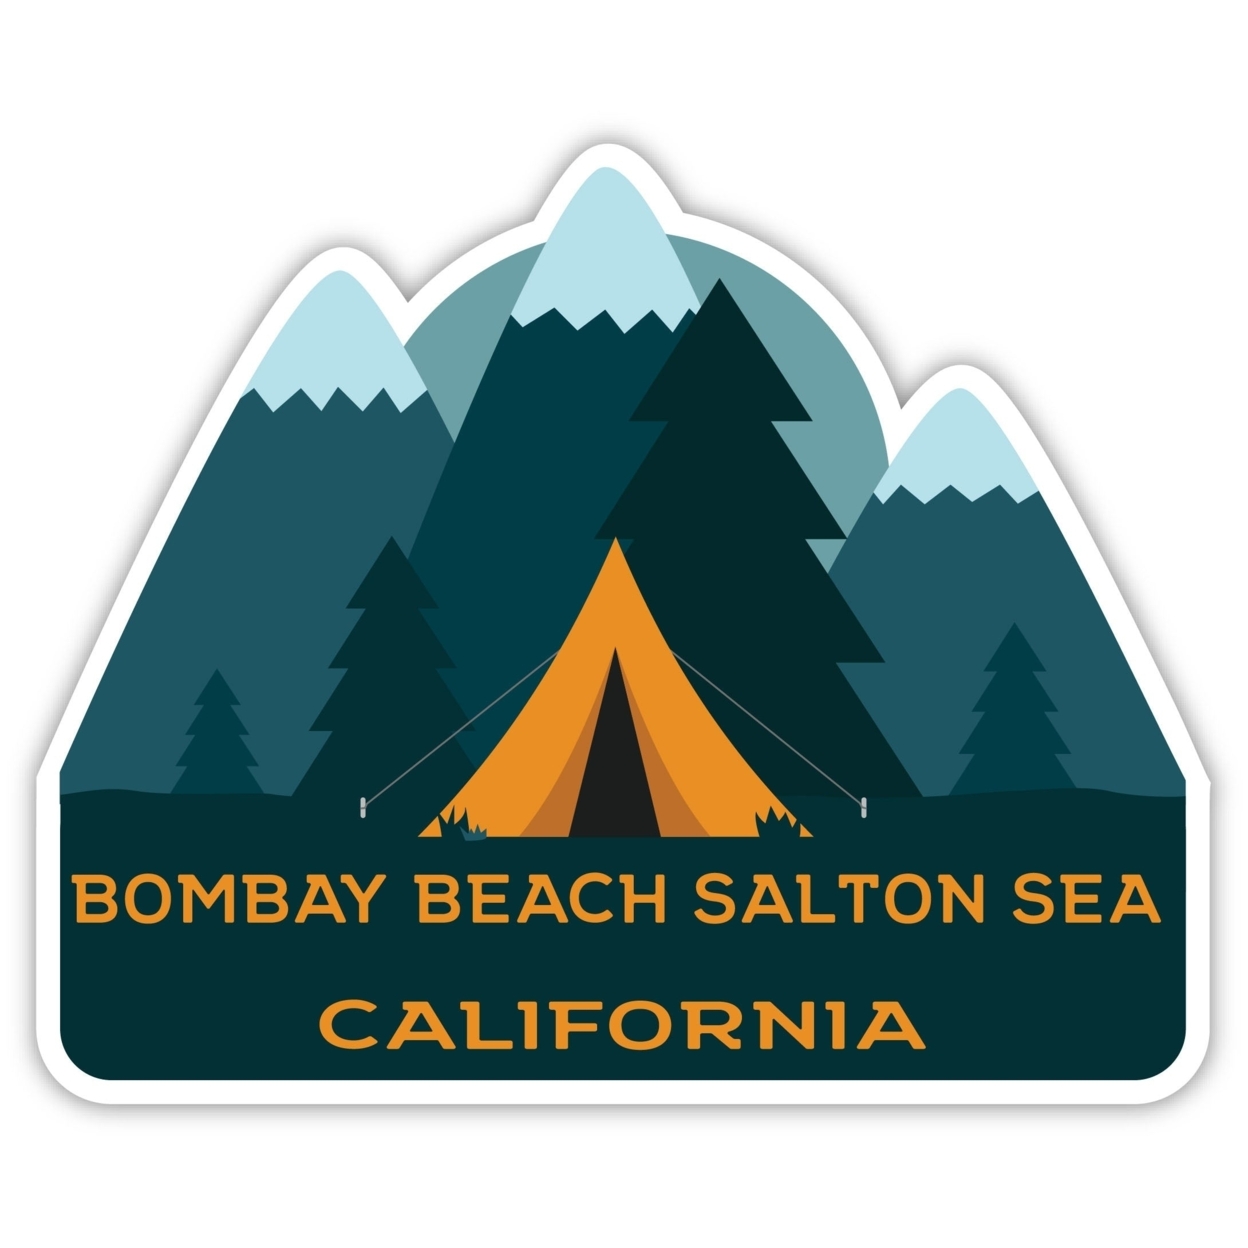 Bombay Beach Salton Sea California Souvenir Decorative Stickers (Choose Theme And Size) - 4-Pack, 4-Inch, Tent